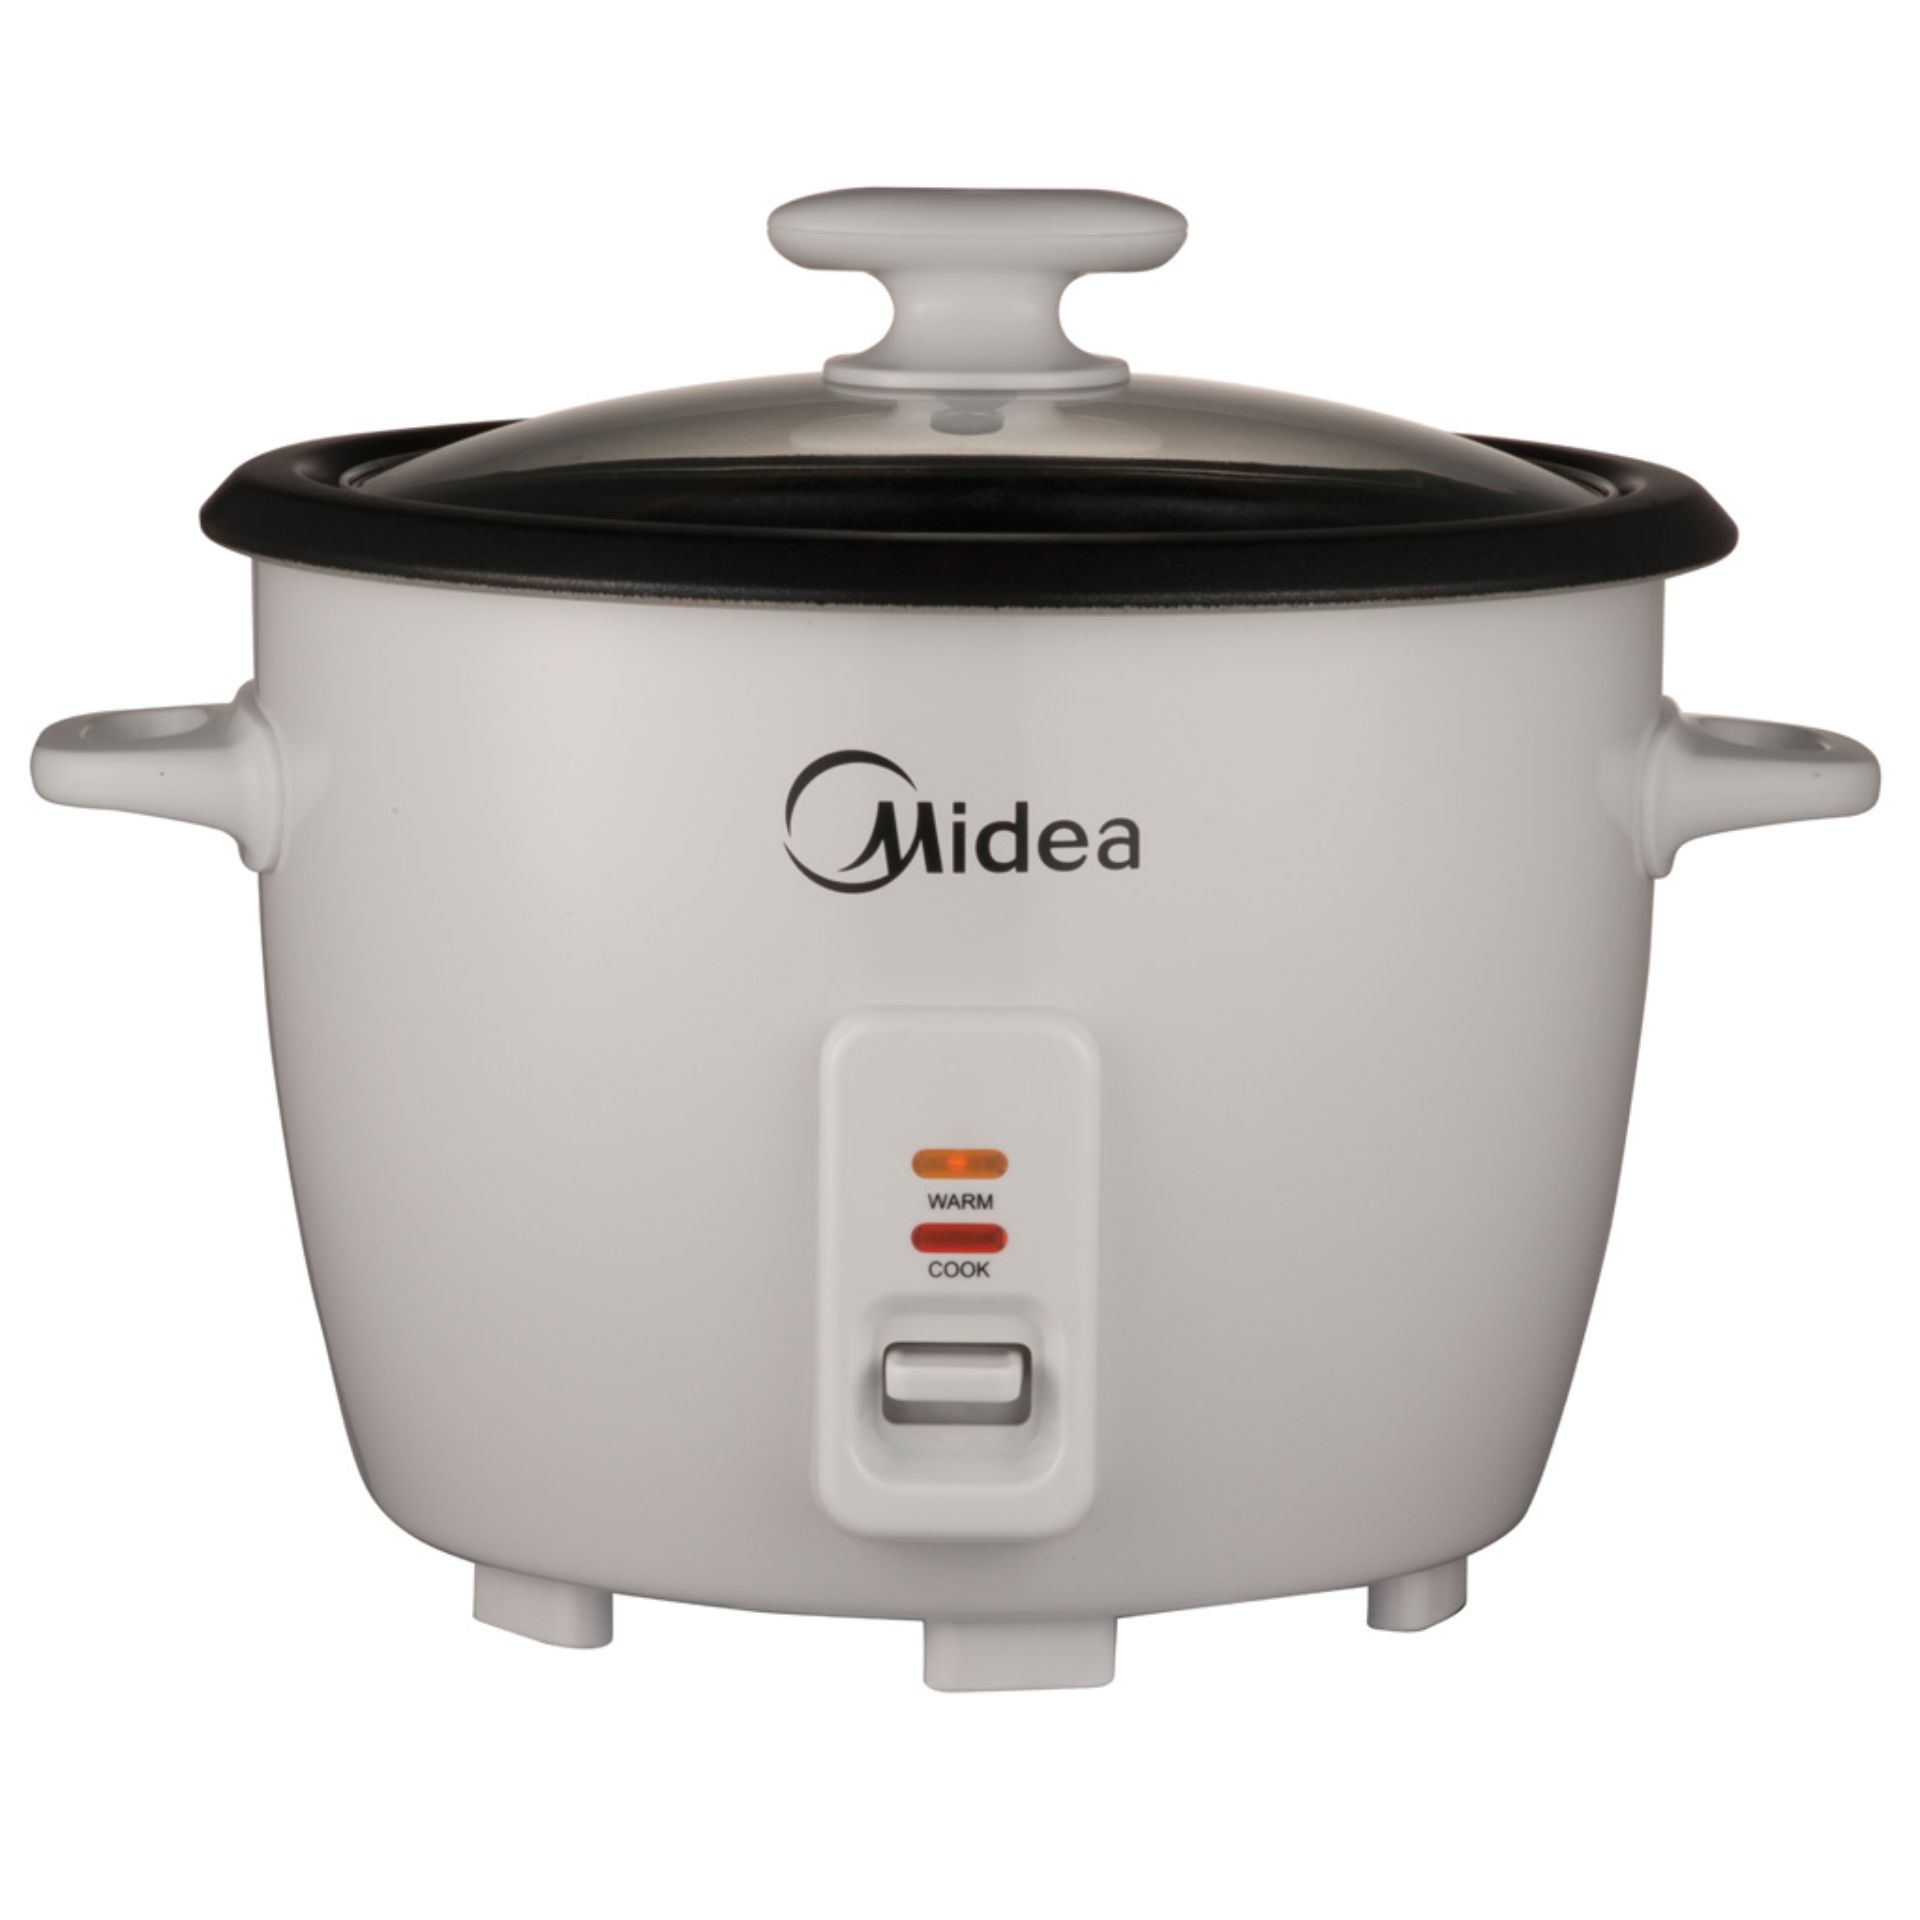 Midea Rice cooker